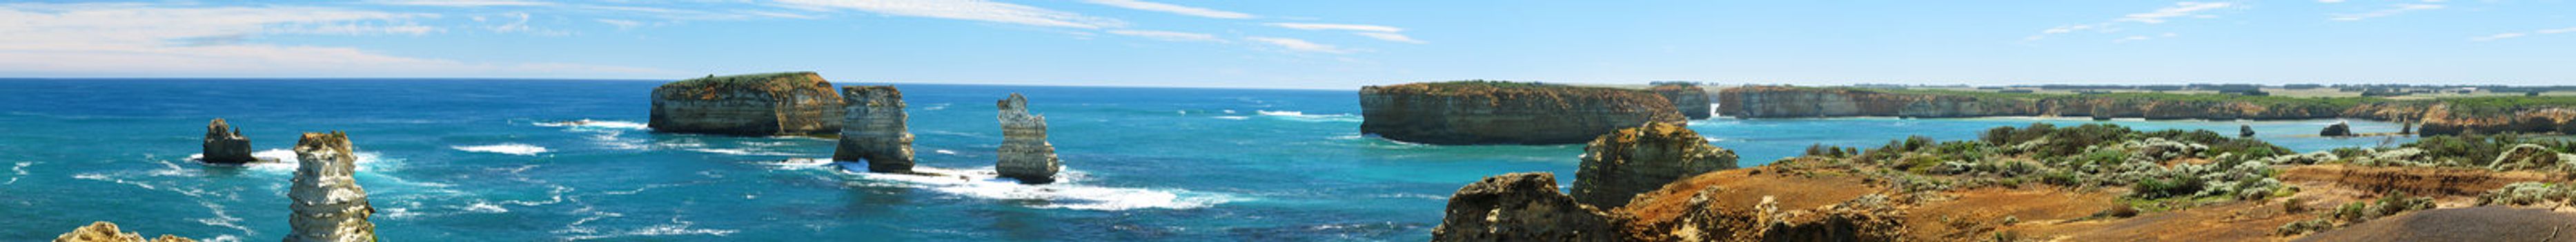 panorama of the south coast of australia